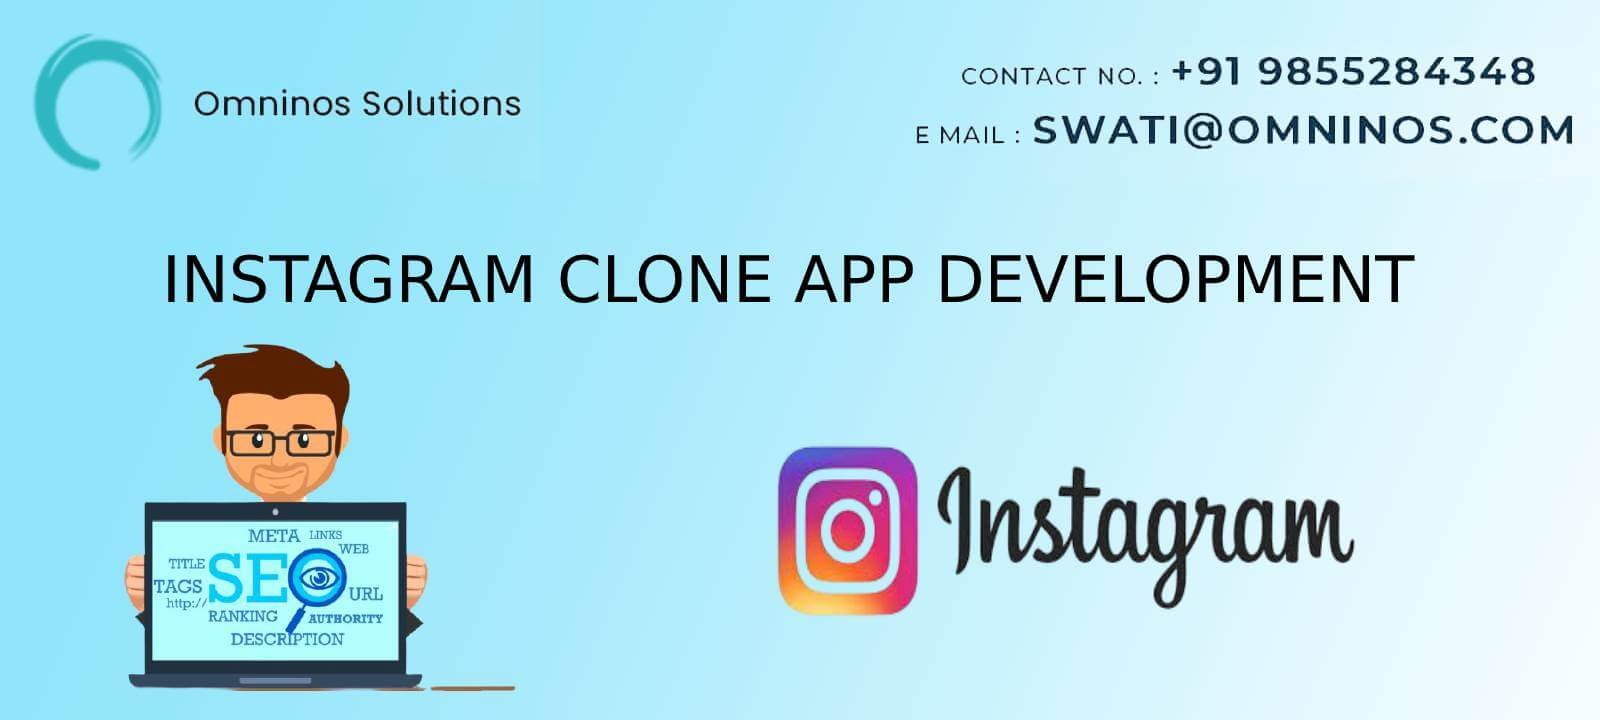 Omninos solution instagram clone app development